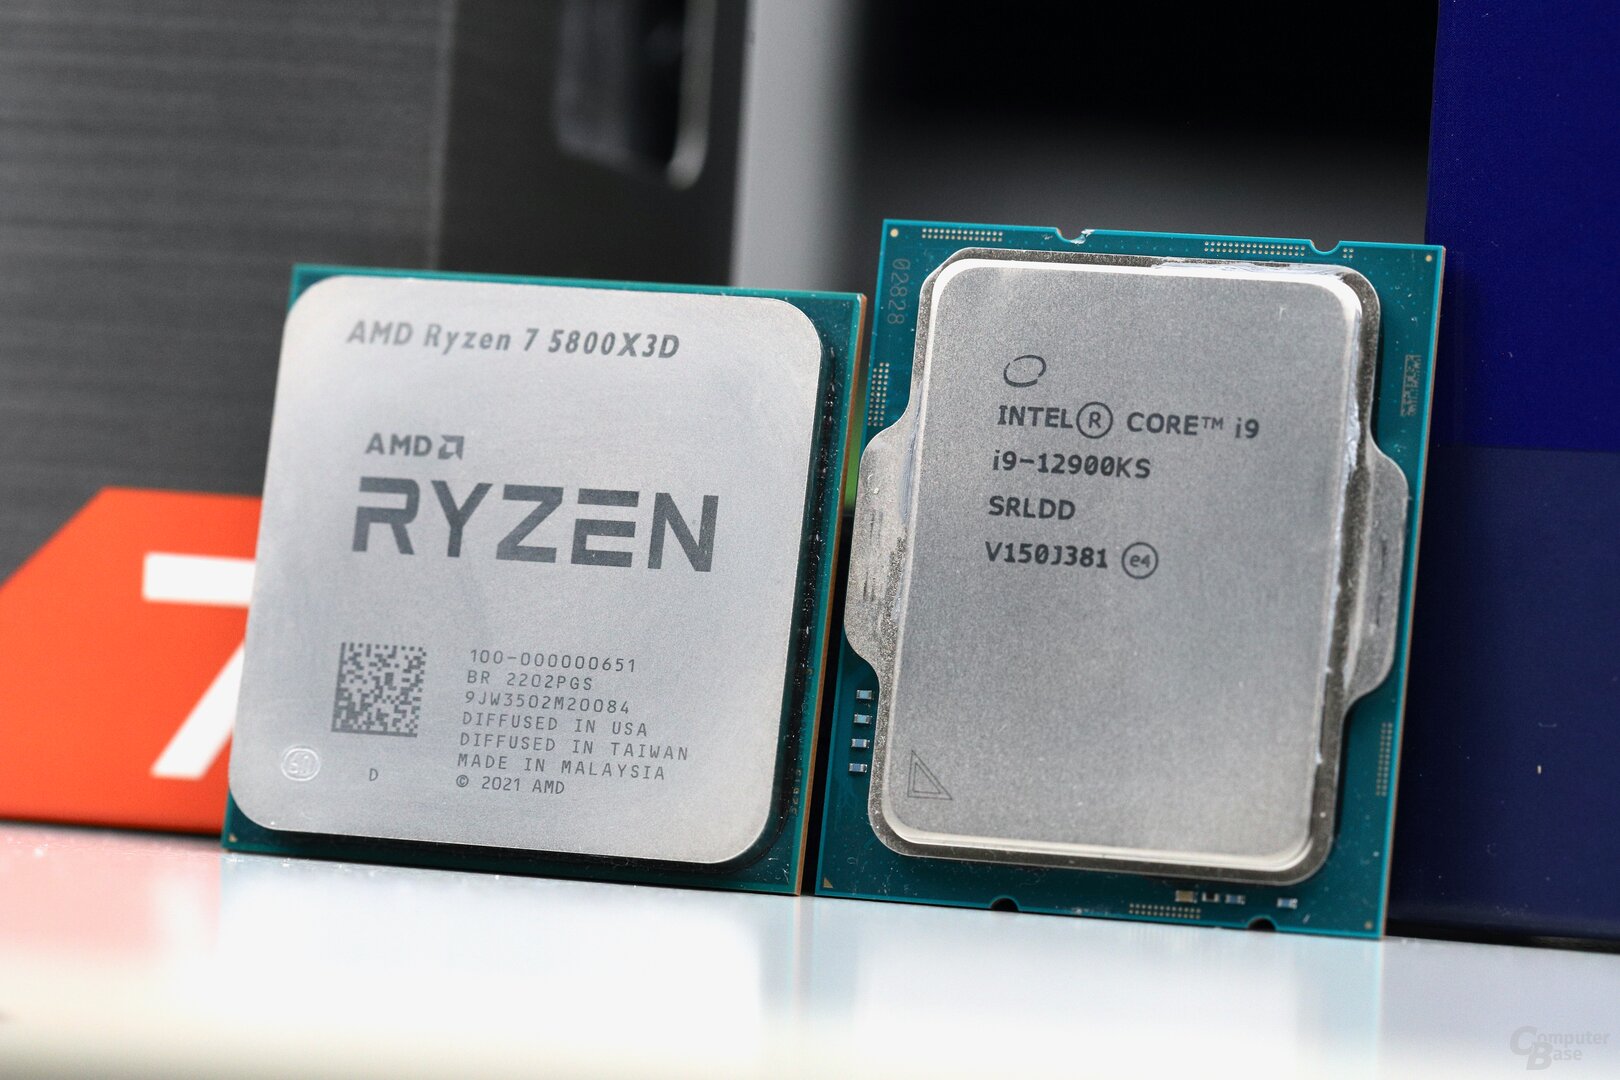 AMD Ryzen 7 5800X3D Review Roundup